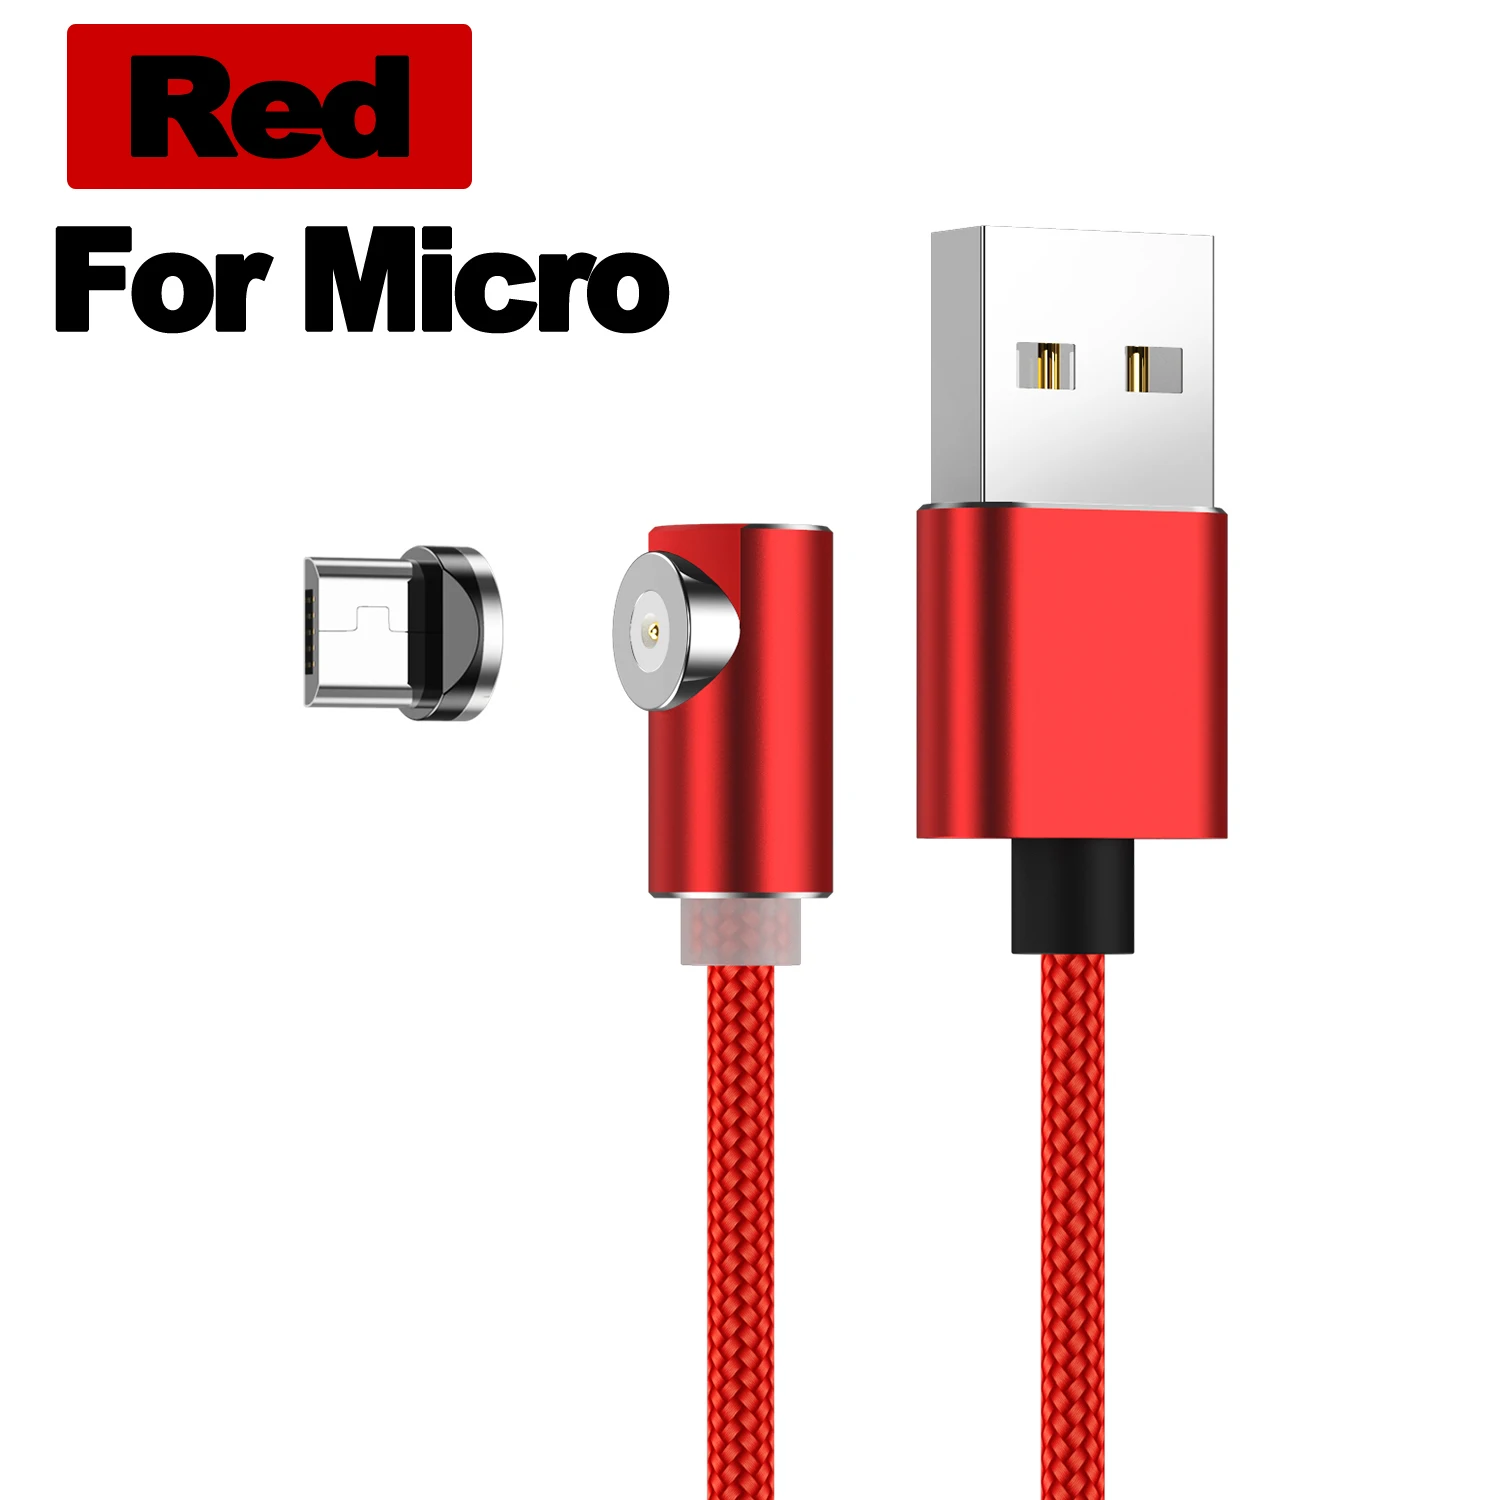 Lovebay 2 м Быстрый Магнитный кабель type C Micro usb зарядка для iPhone samsung Android мобильный телефон Магнитный кабель зарядное устройство кабель - Цвет: Micro For Red